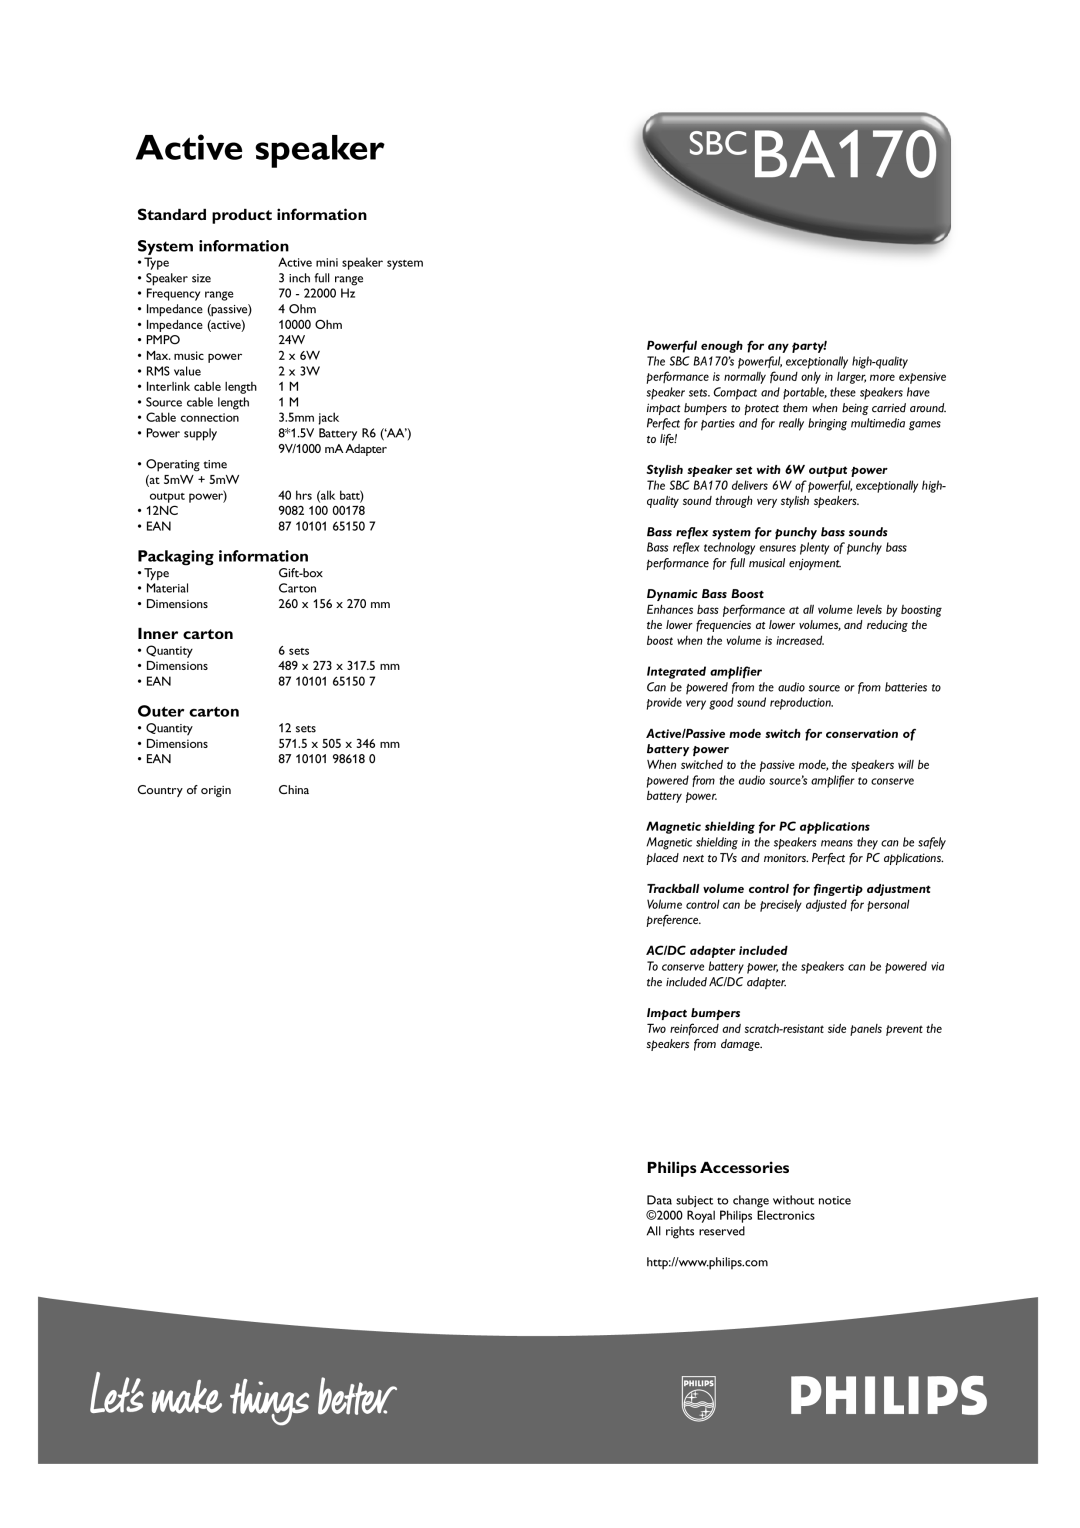 Philips SBCBA170 Active speaker, Standard product information System information, Packaging information, Inner carton 